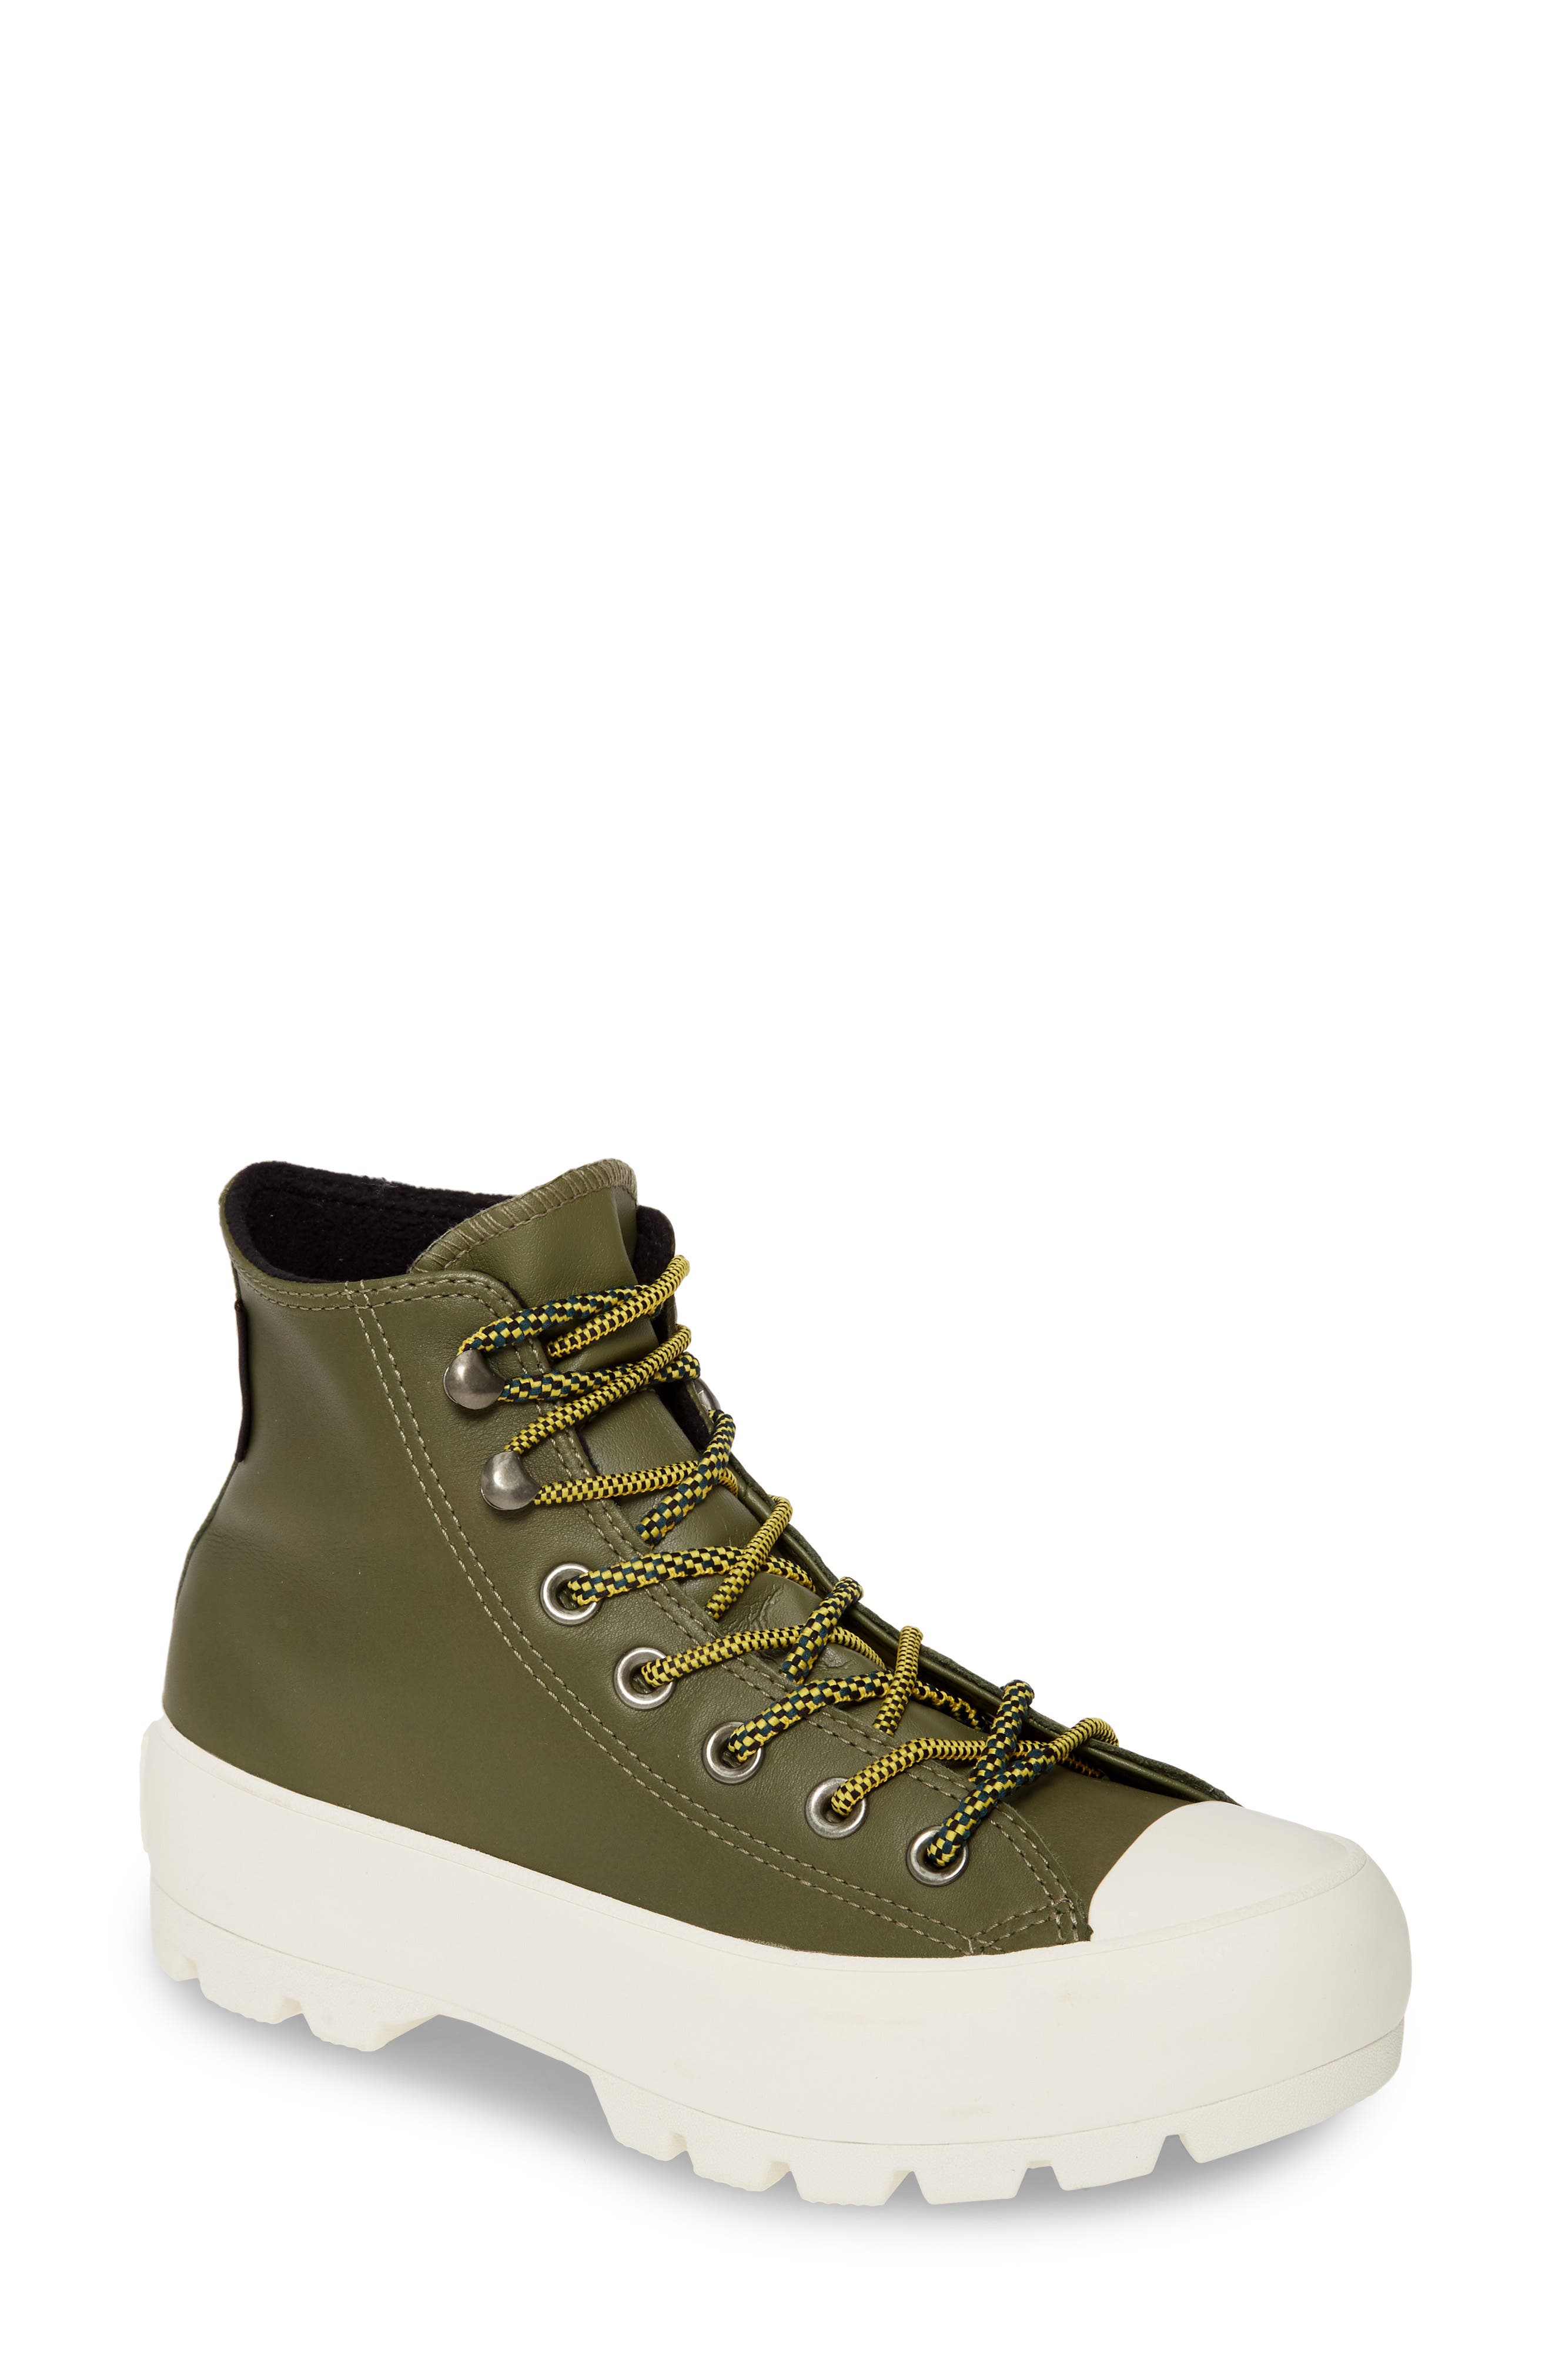 converse chuck taylor all star waterproof sneaker boot